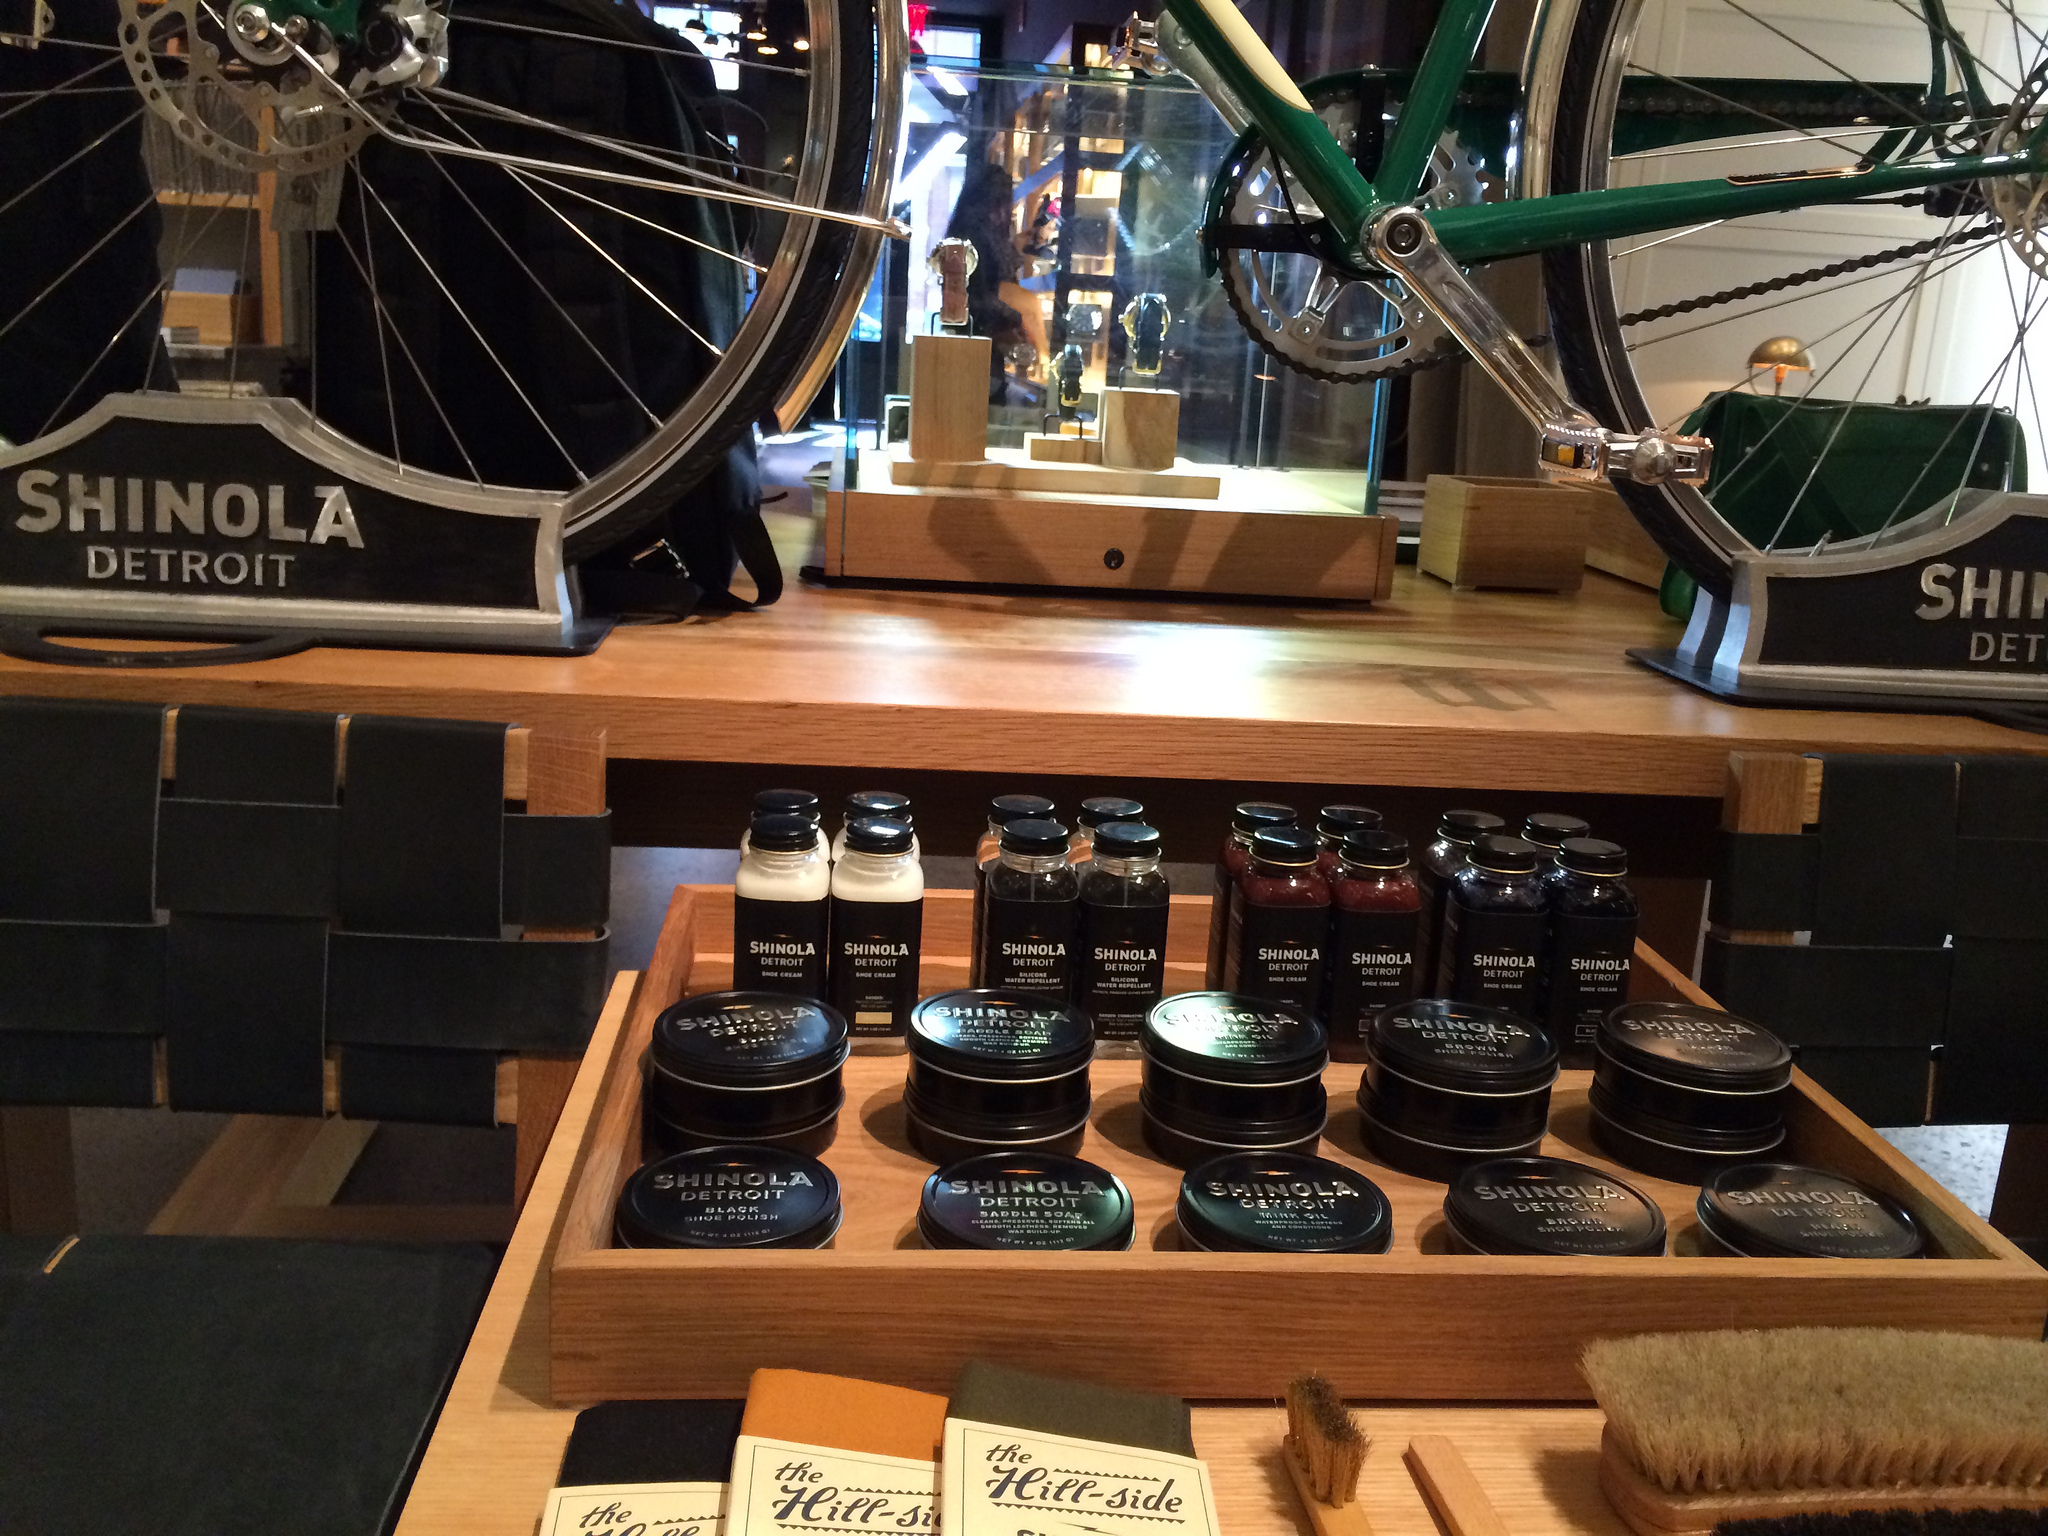 Saddle soap and Shinola bike at Shinola in New York. Photo by alphacityguides.